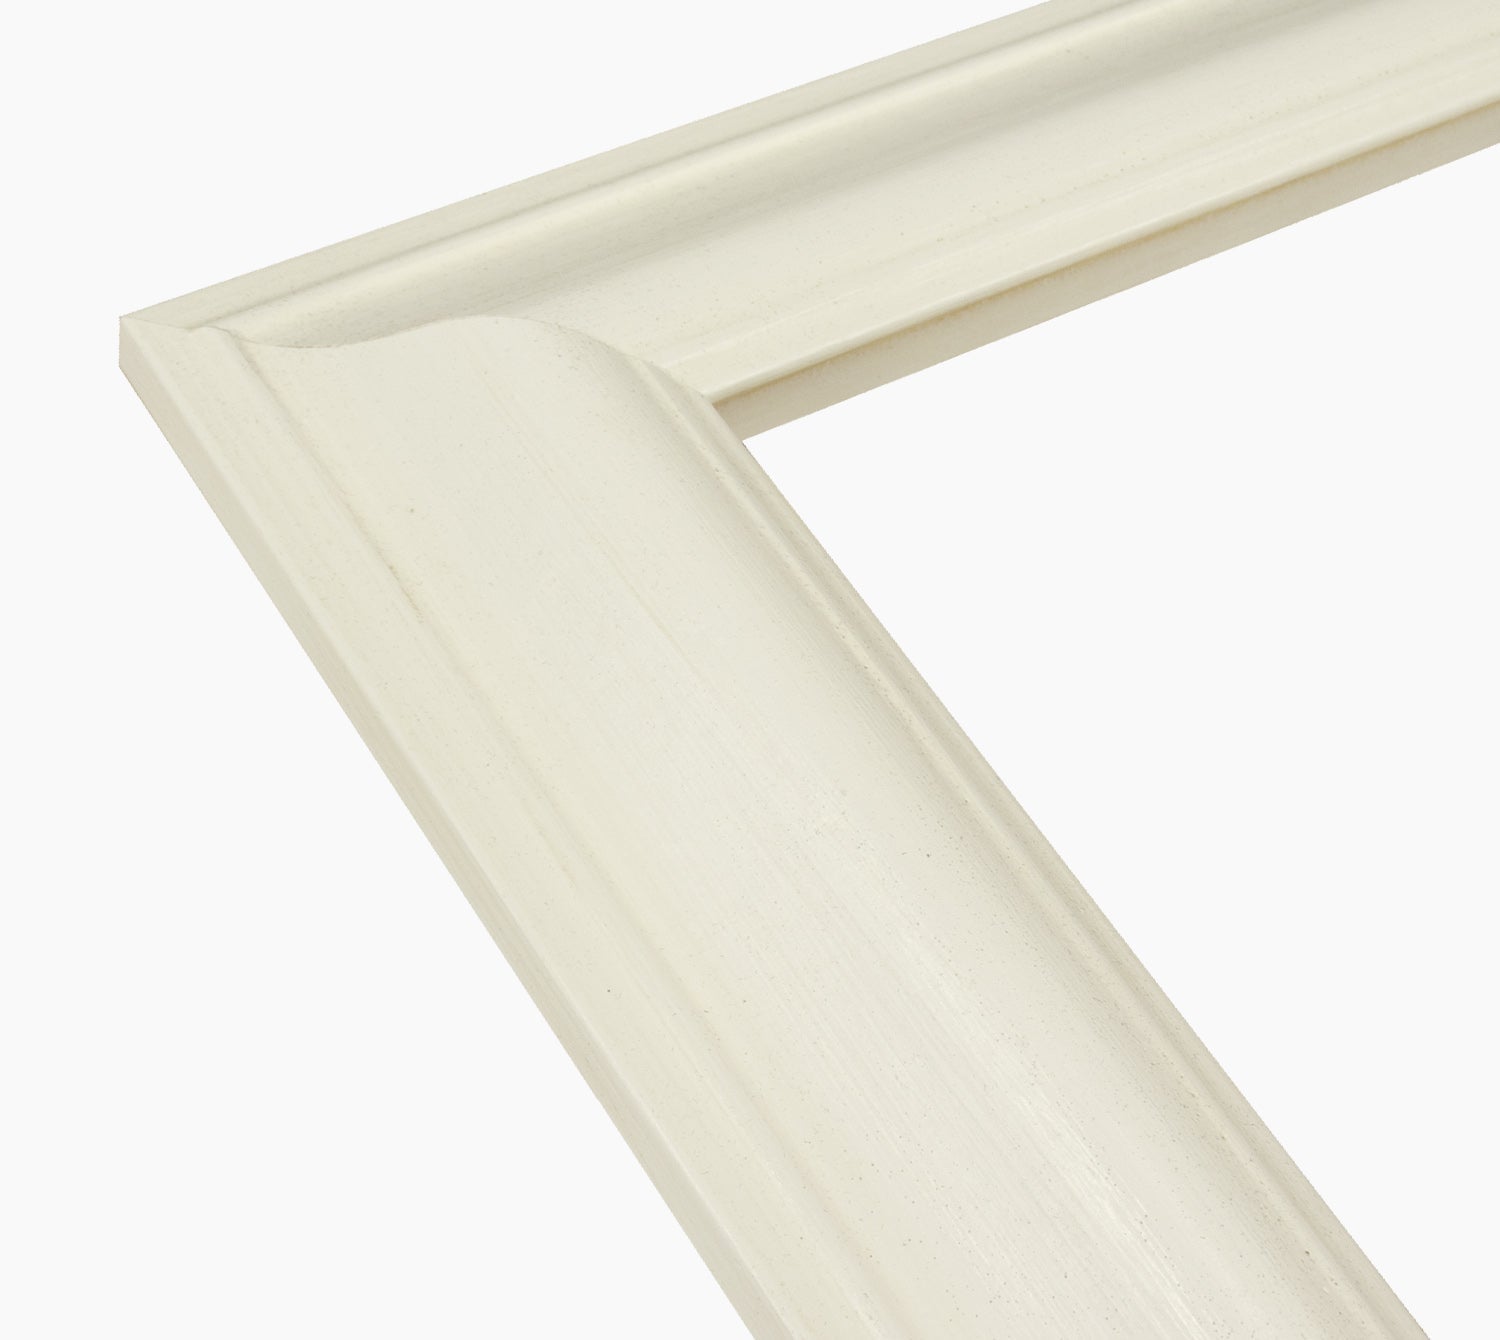 628.899 cadre en bois blanc avec de la cire mesure de profil 60x37 mm Lombarda cornici S.n.c.